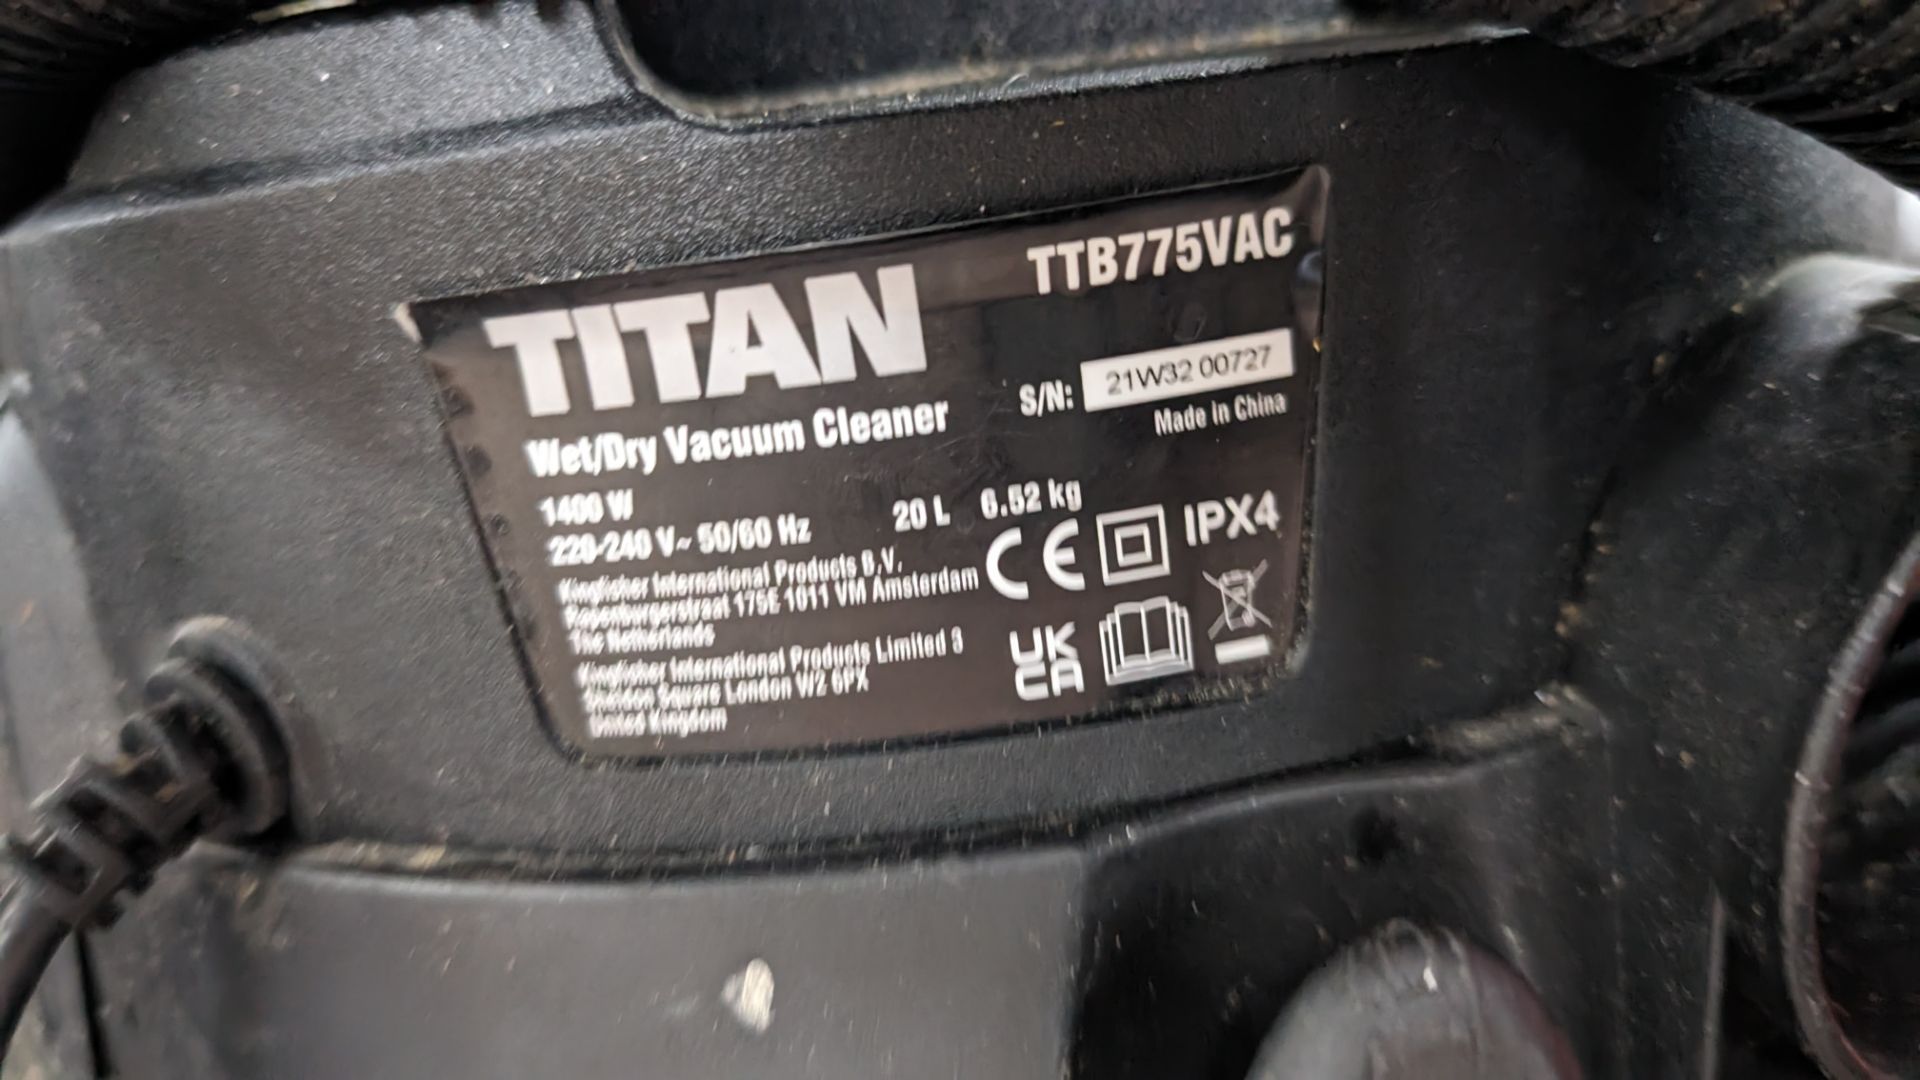 Titan commercial vacuum cleaner - Image 4 of 8